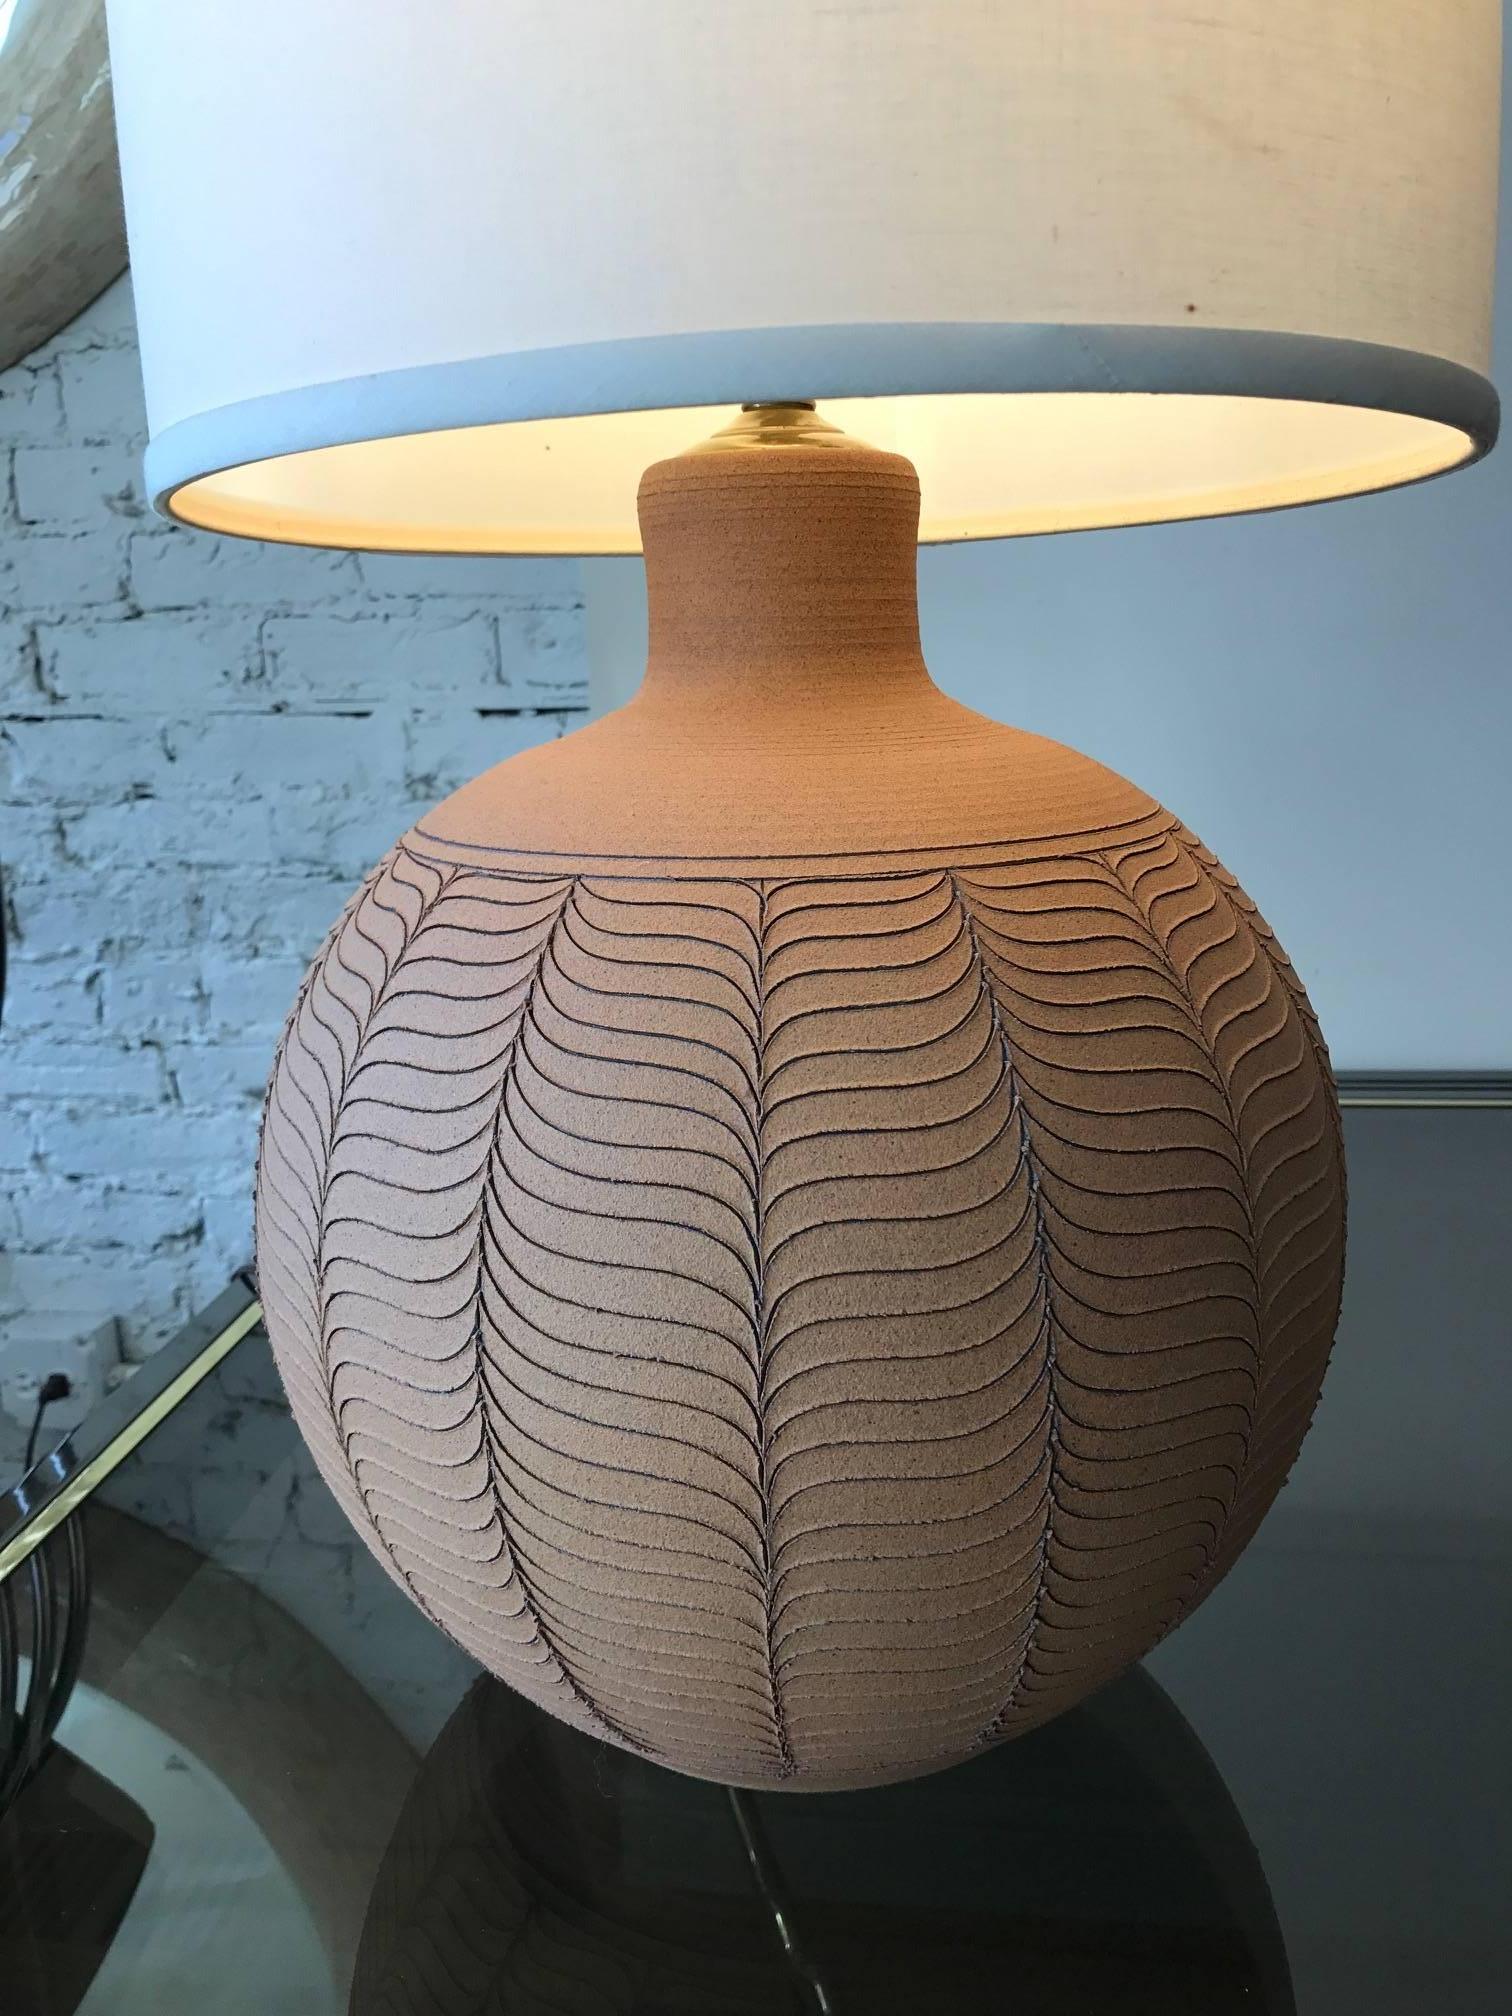 Hand-Crafted Unglazed Ceramic Studio Pottery Lamp